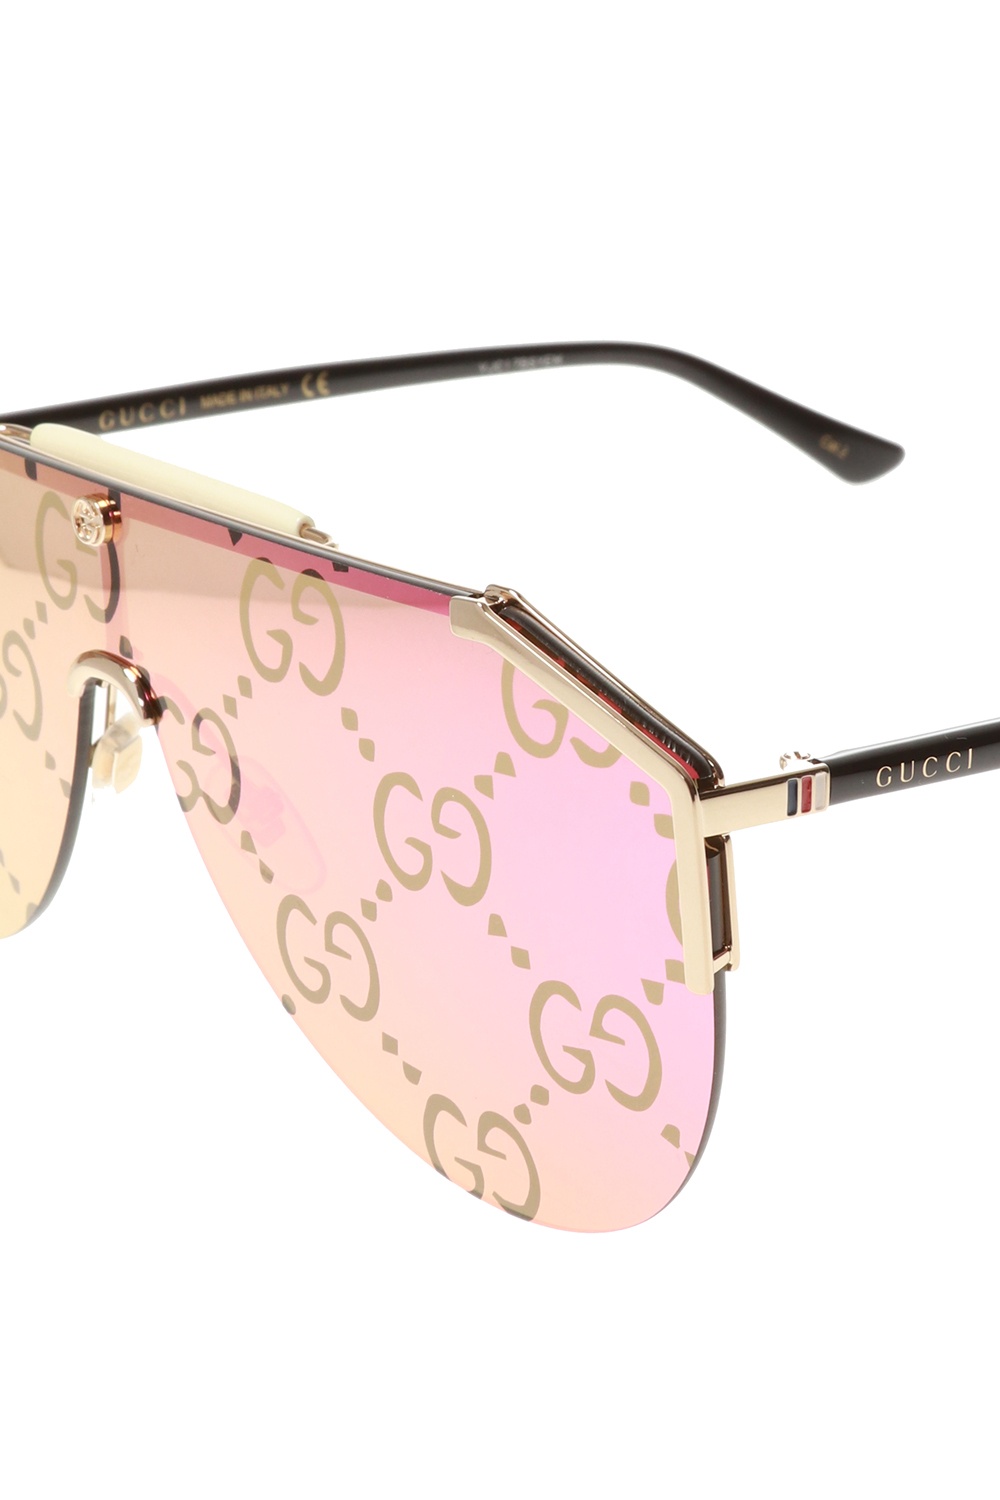 Gucci - Sunglasses - Ski Goggles - Ivory Pink - Gucci Eyewear - Avvenice